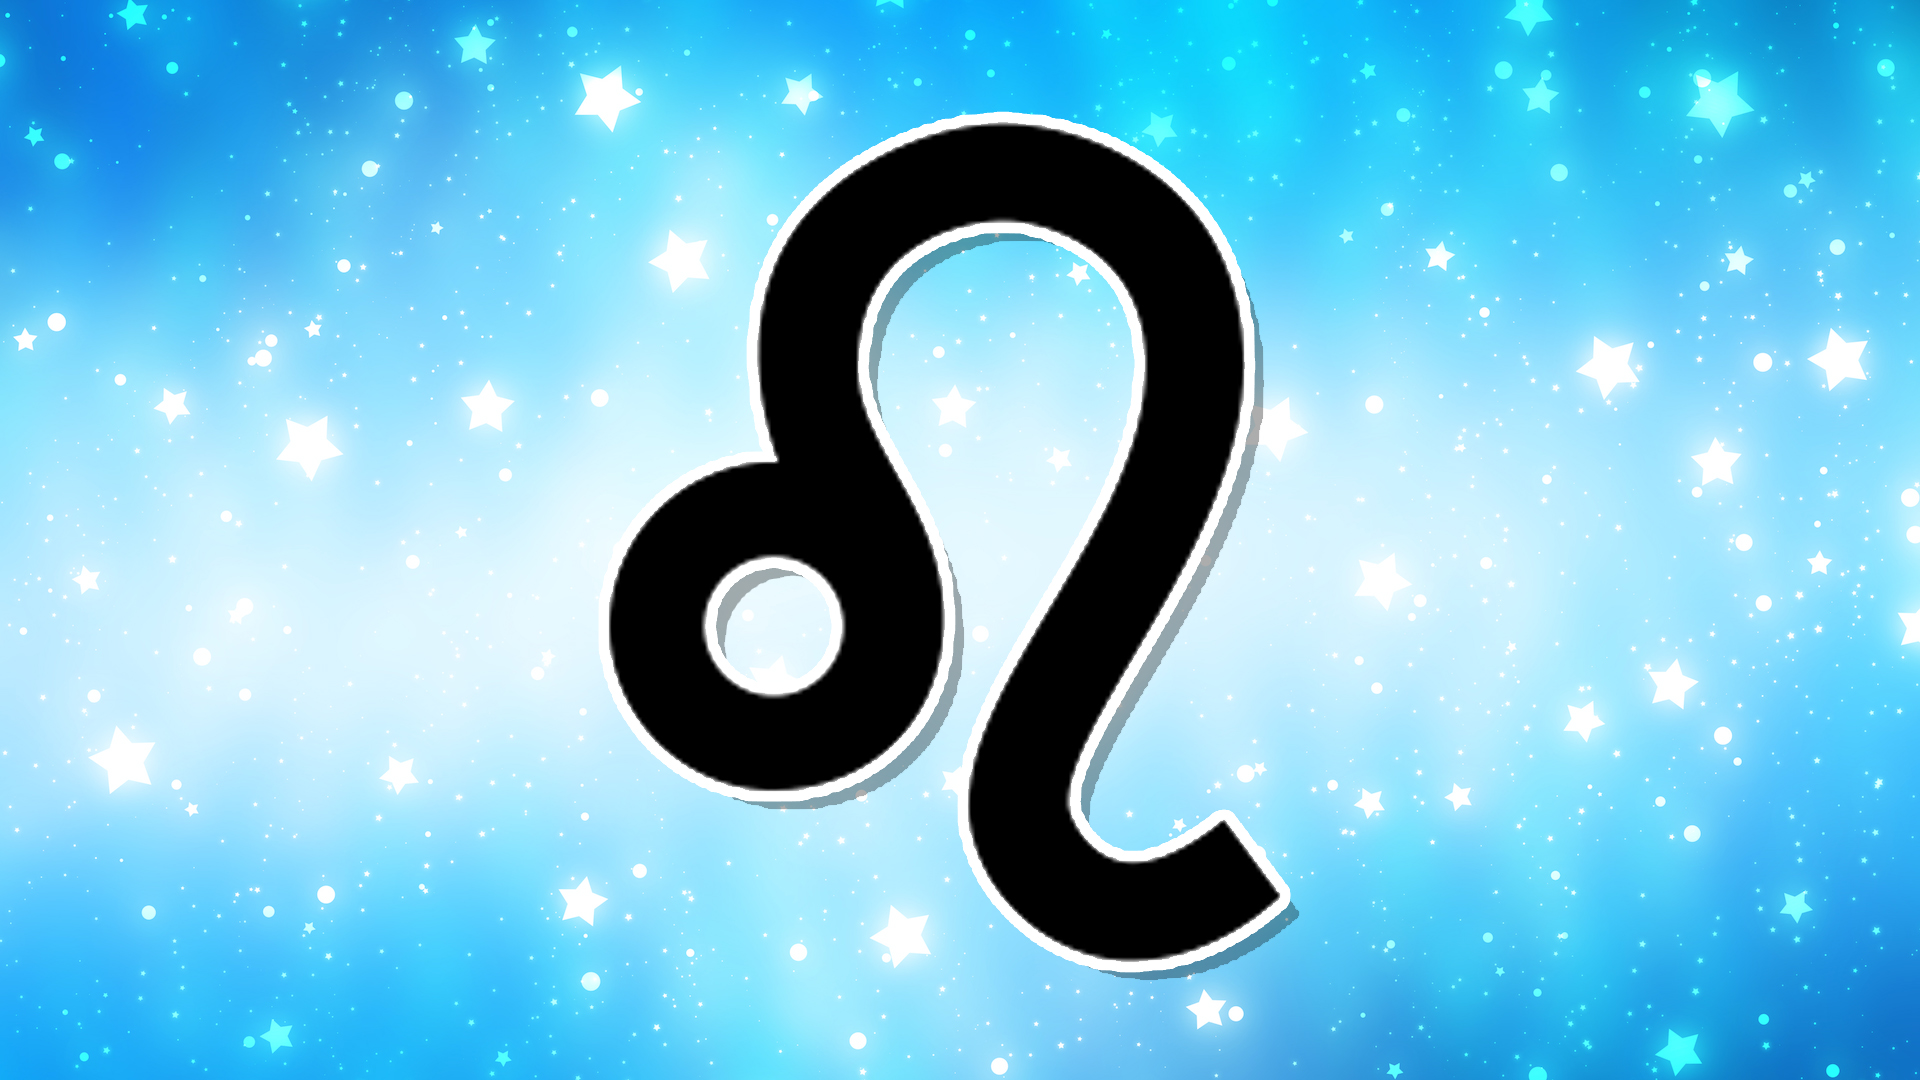 A zodiac symbol 